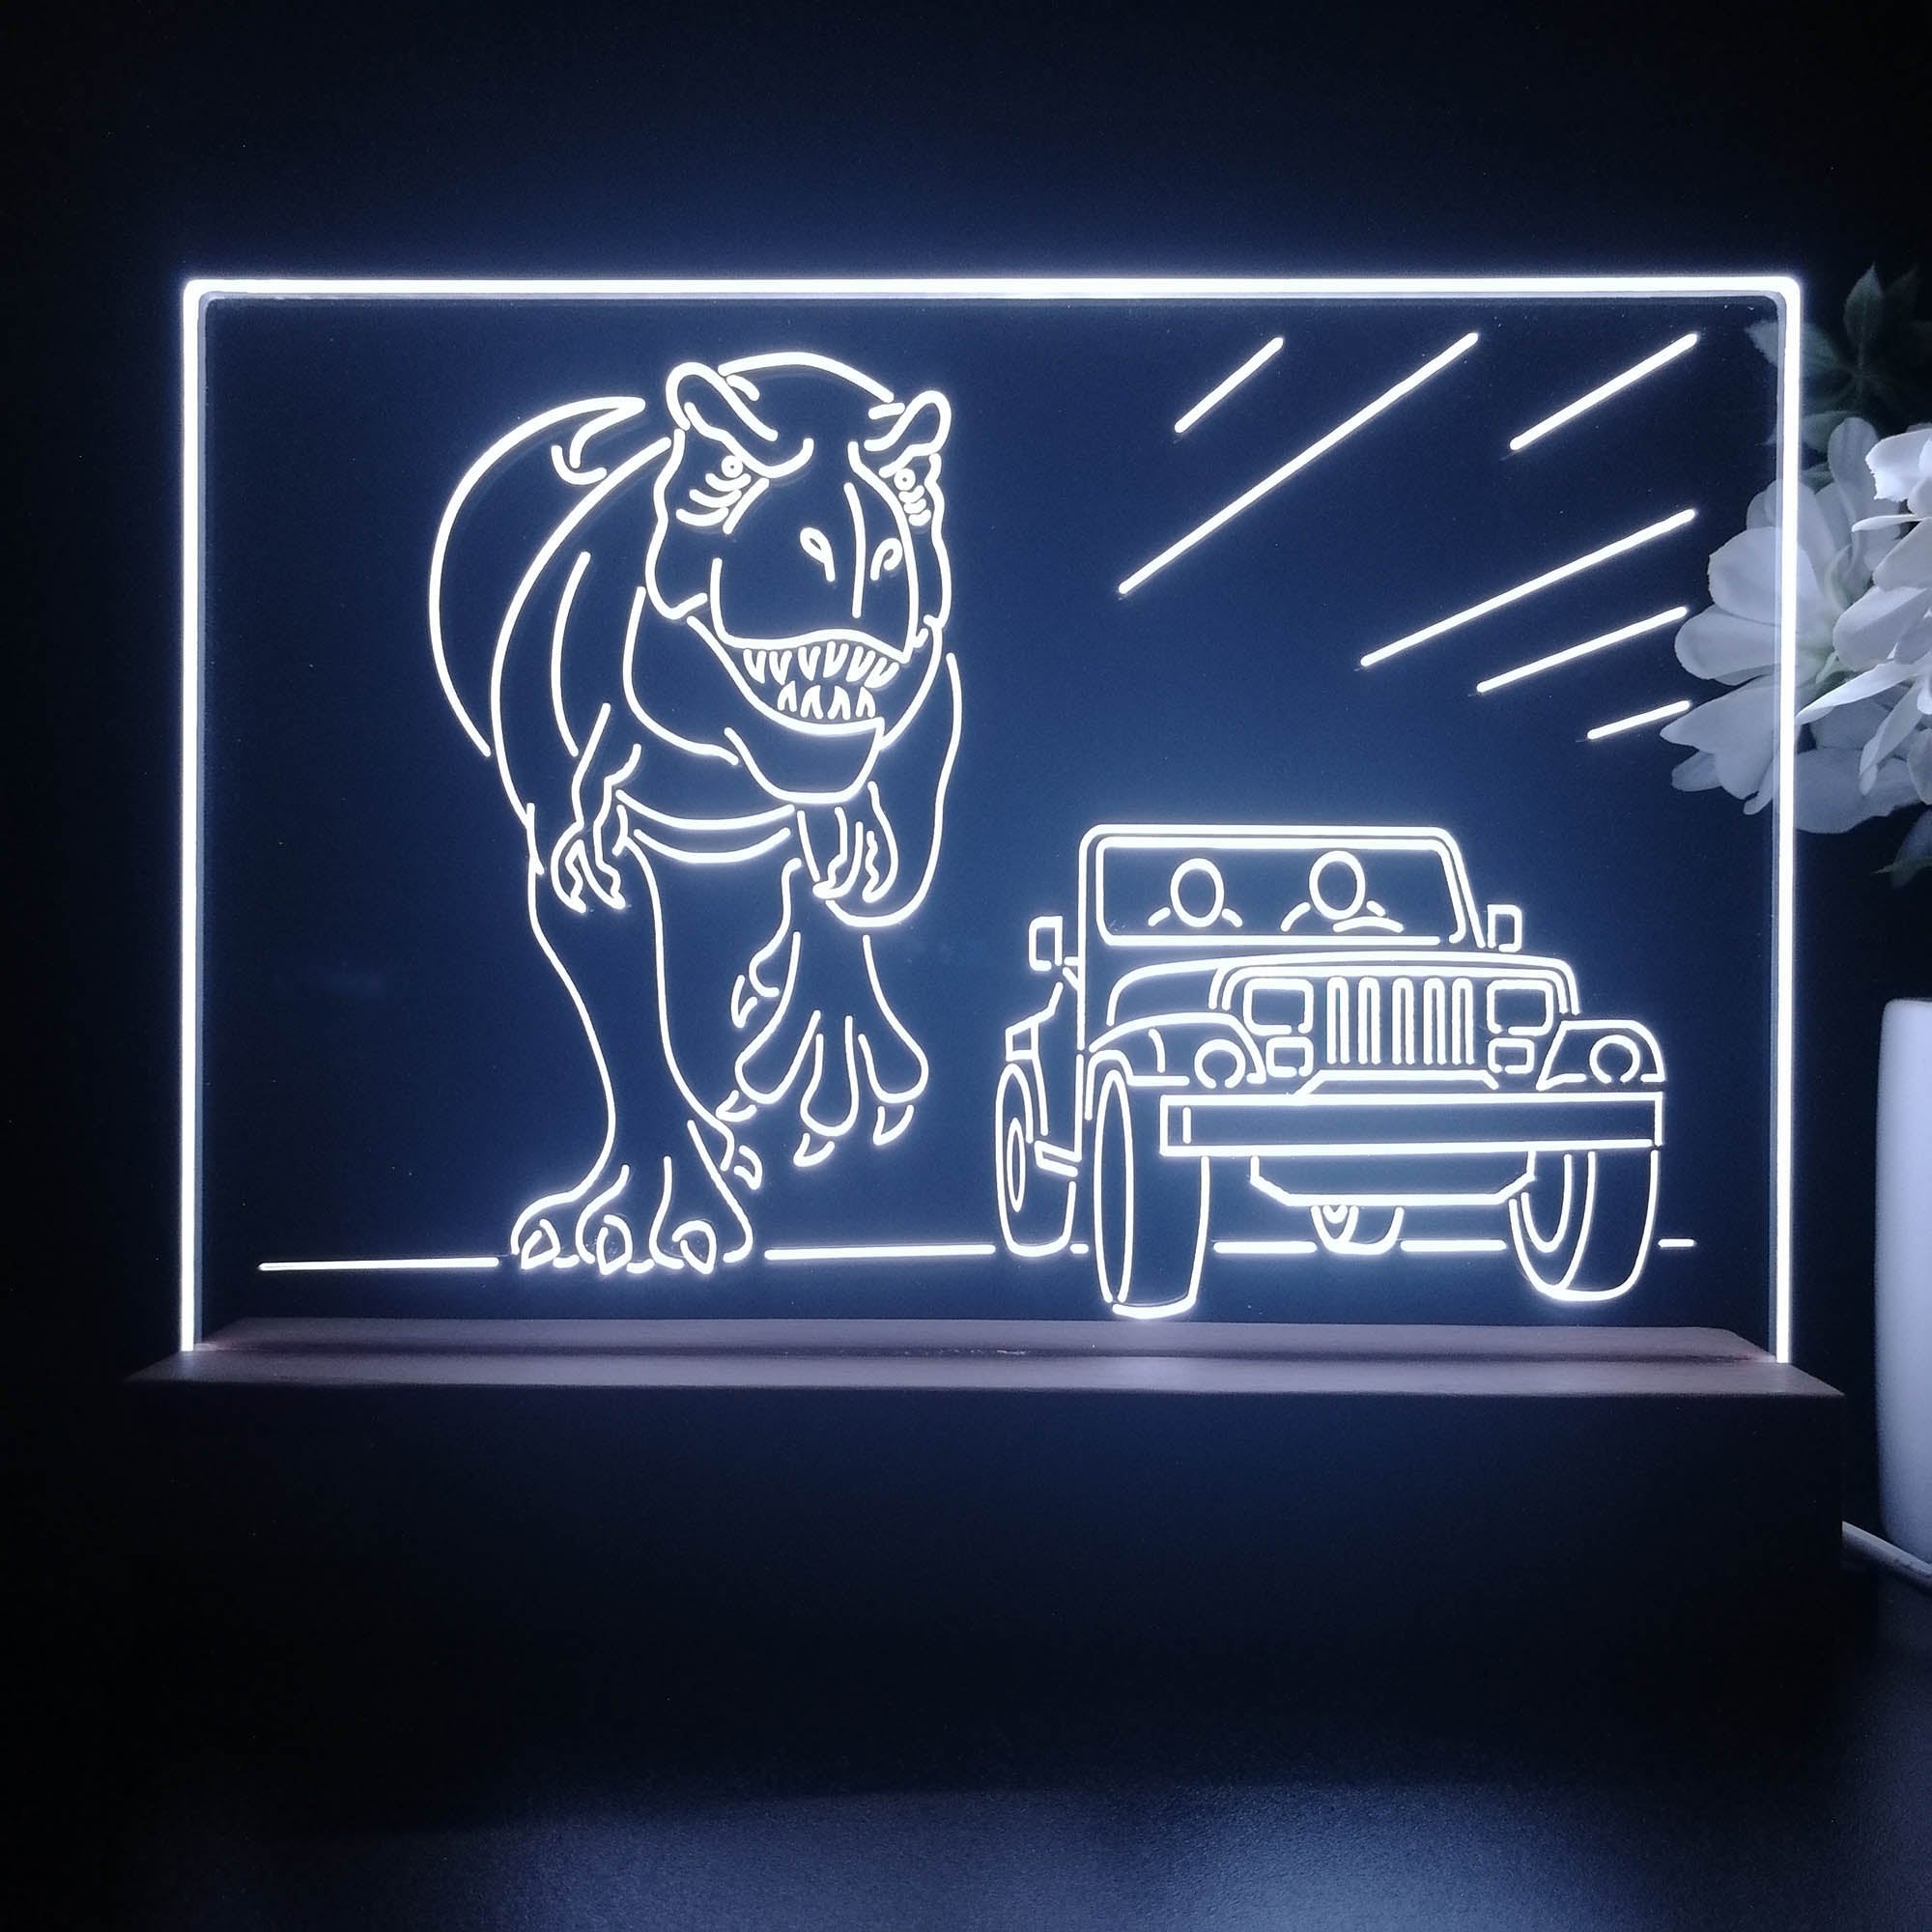 Jurassic Park 3D Illusion Night Light Desk Lamp